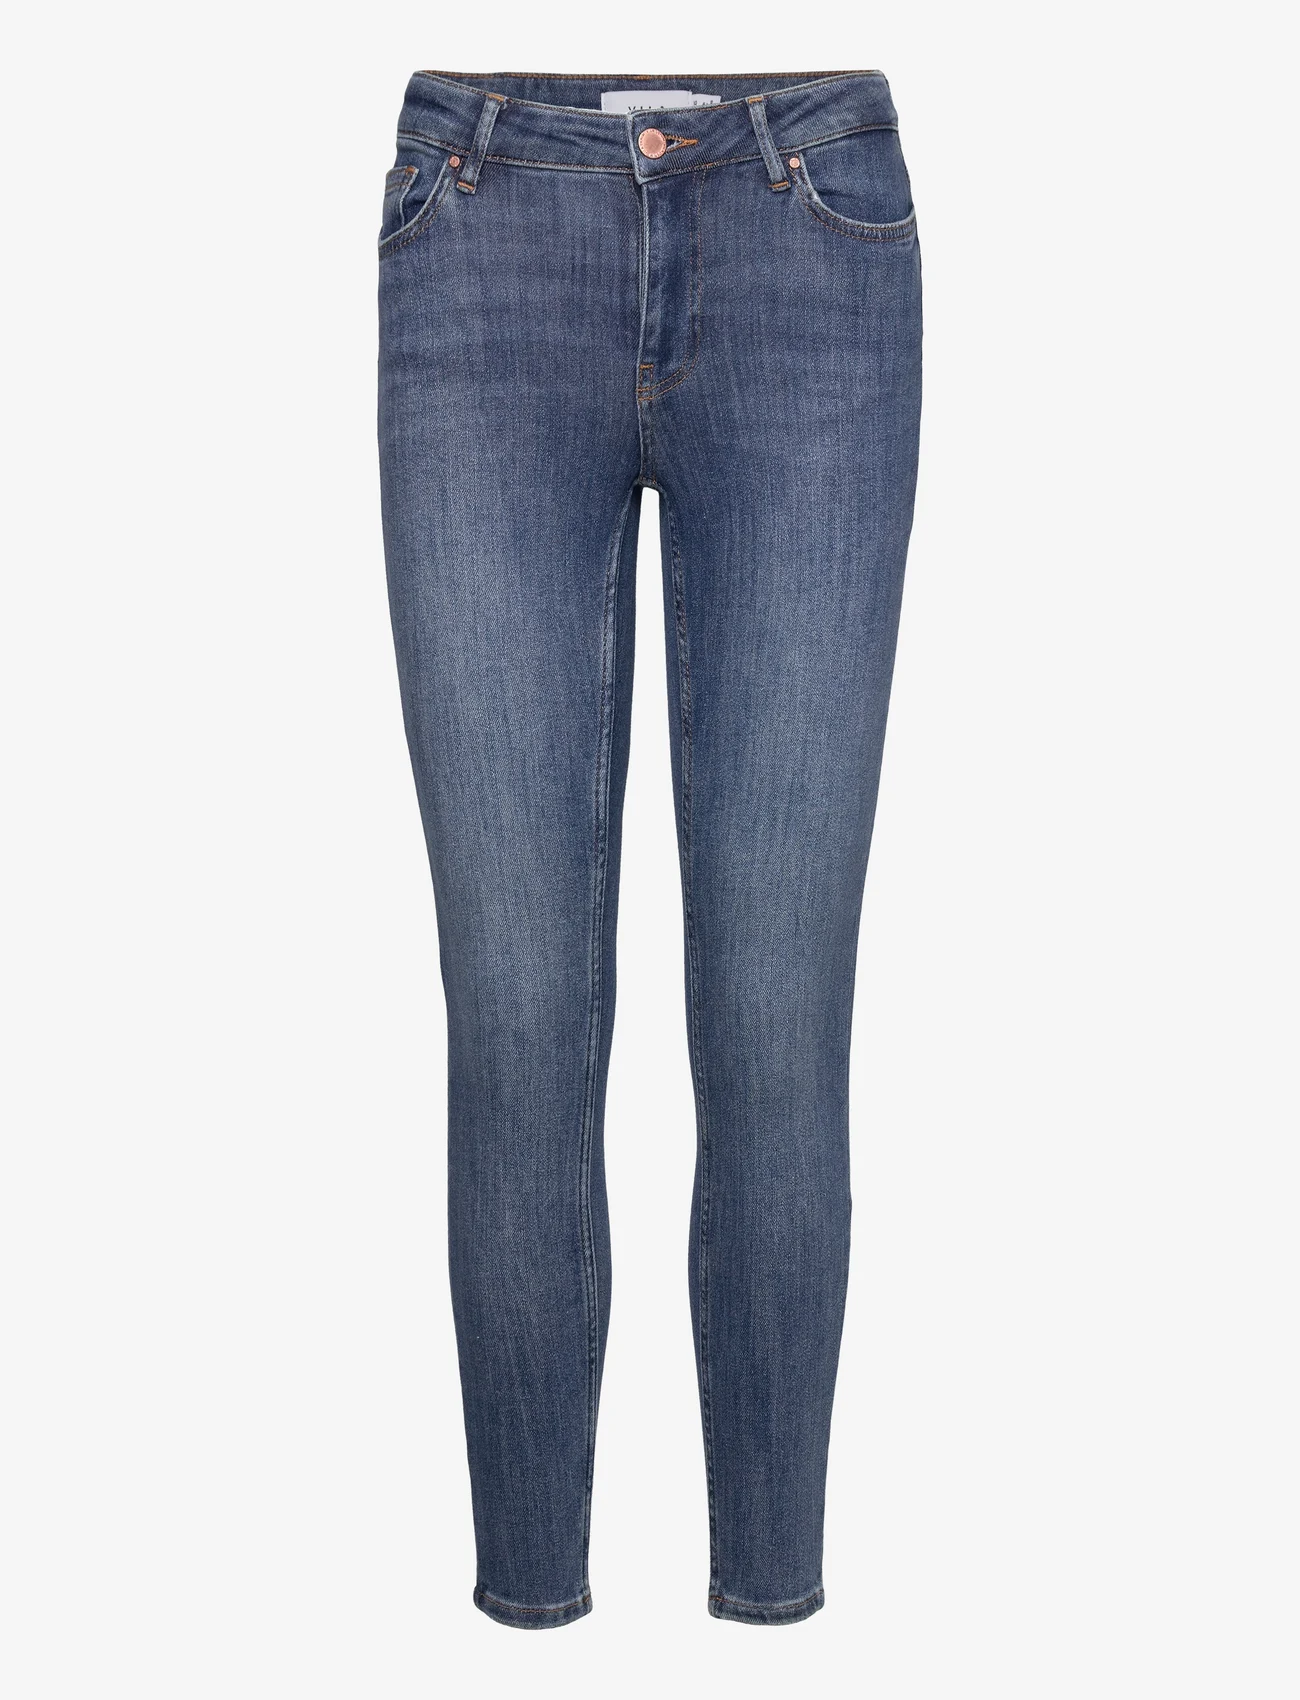 Vila - VISARAH WU02 RW SKINNY JEANS - NOOS - skinny jeans - medium blue denim - 1